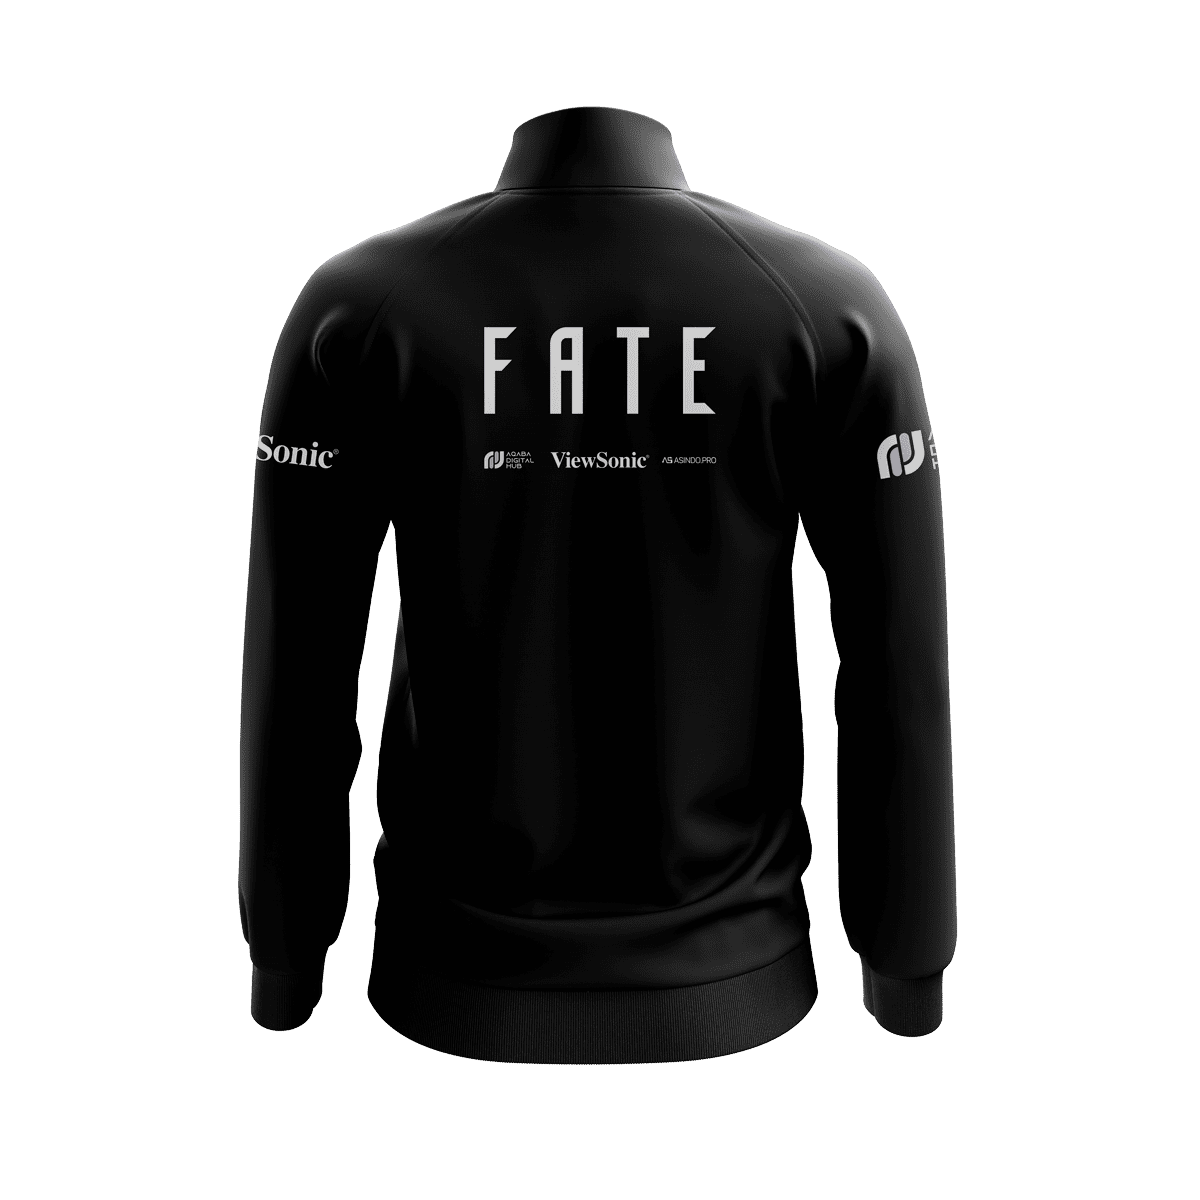 FATE Esports Premium Jacket